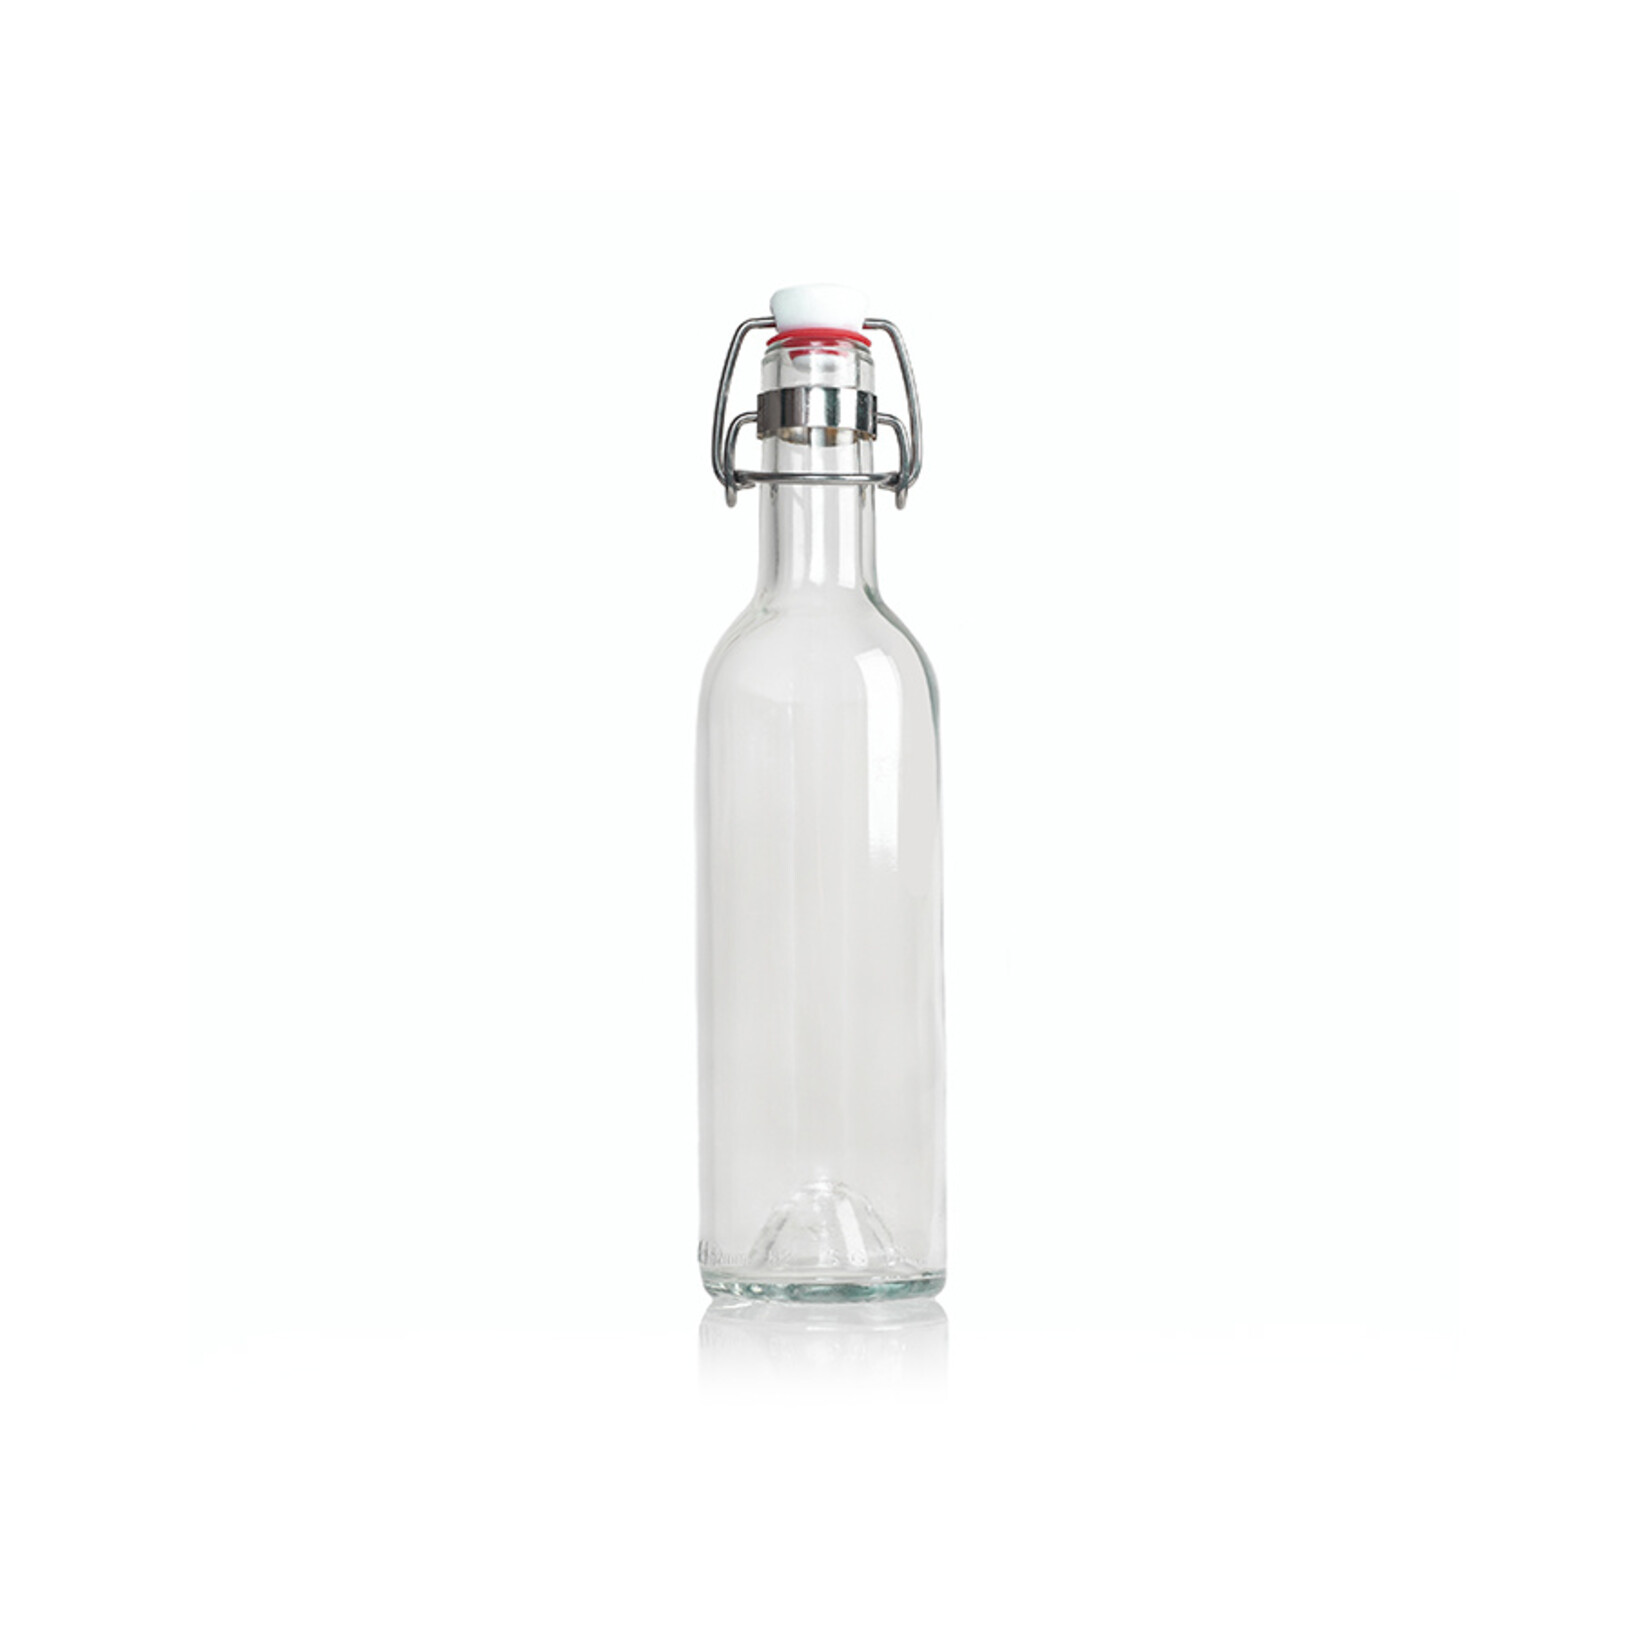 Rebottled Drinkfles -  Rebottled Fles - 375 ml - Clear